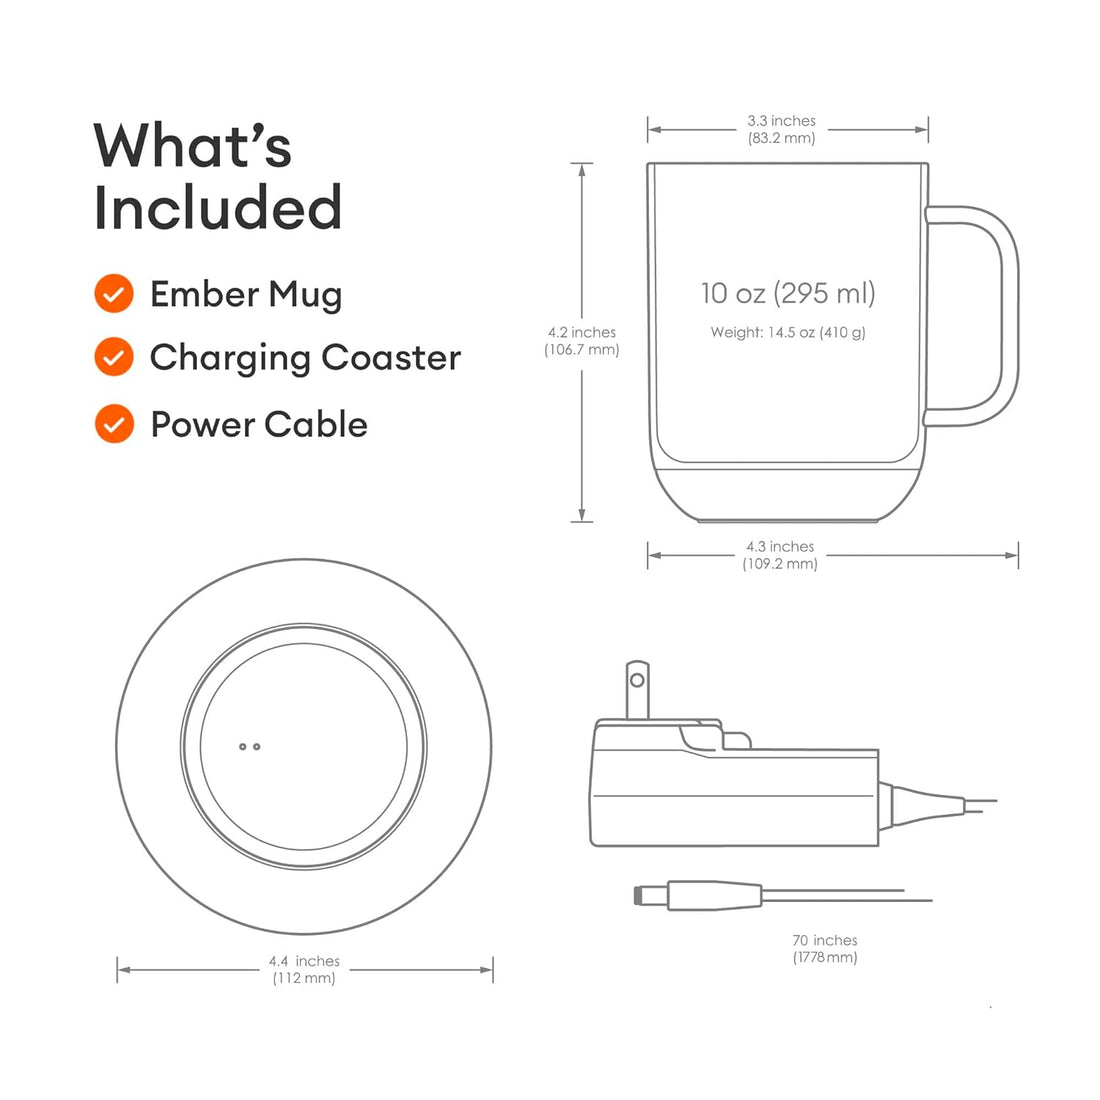 Ember Temperature Control Smart Mug 2, 10 oz, Gold, 1.5-hr Battery Life - App Controlled Heated Coffee Mug